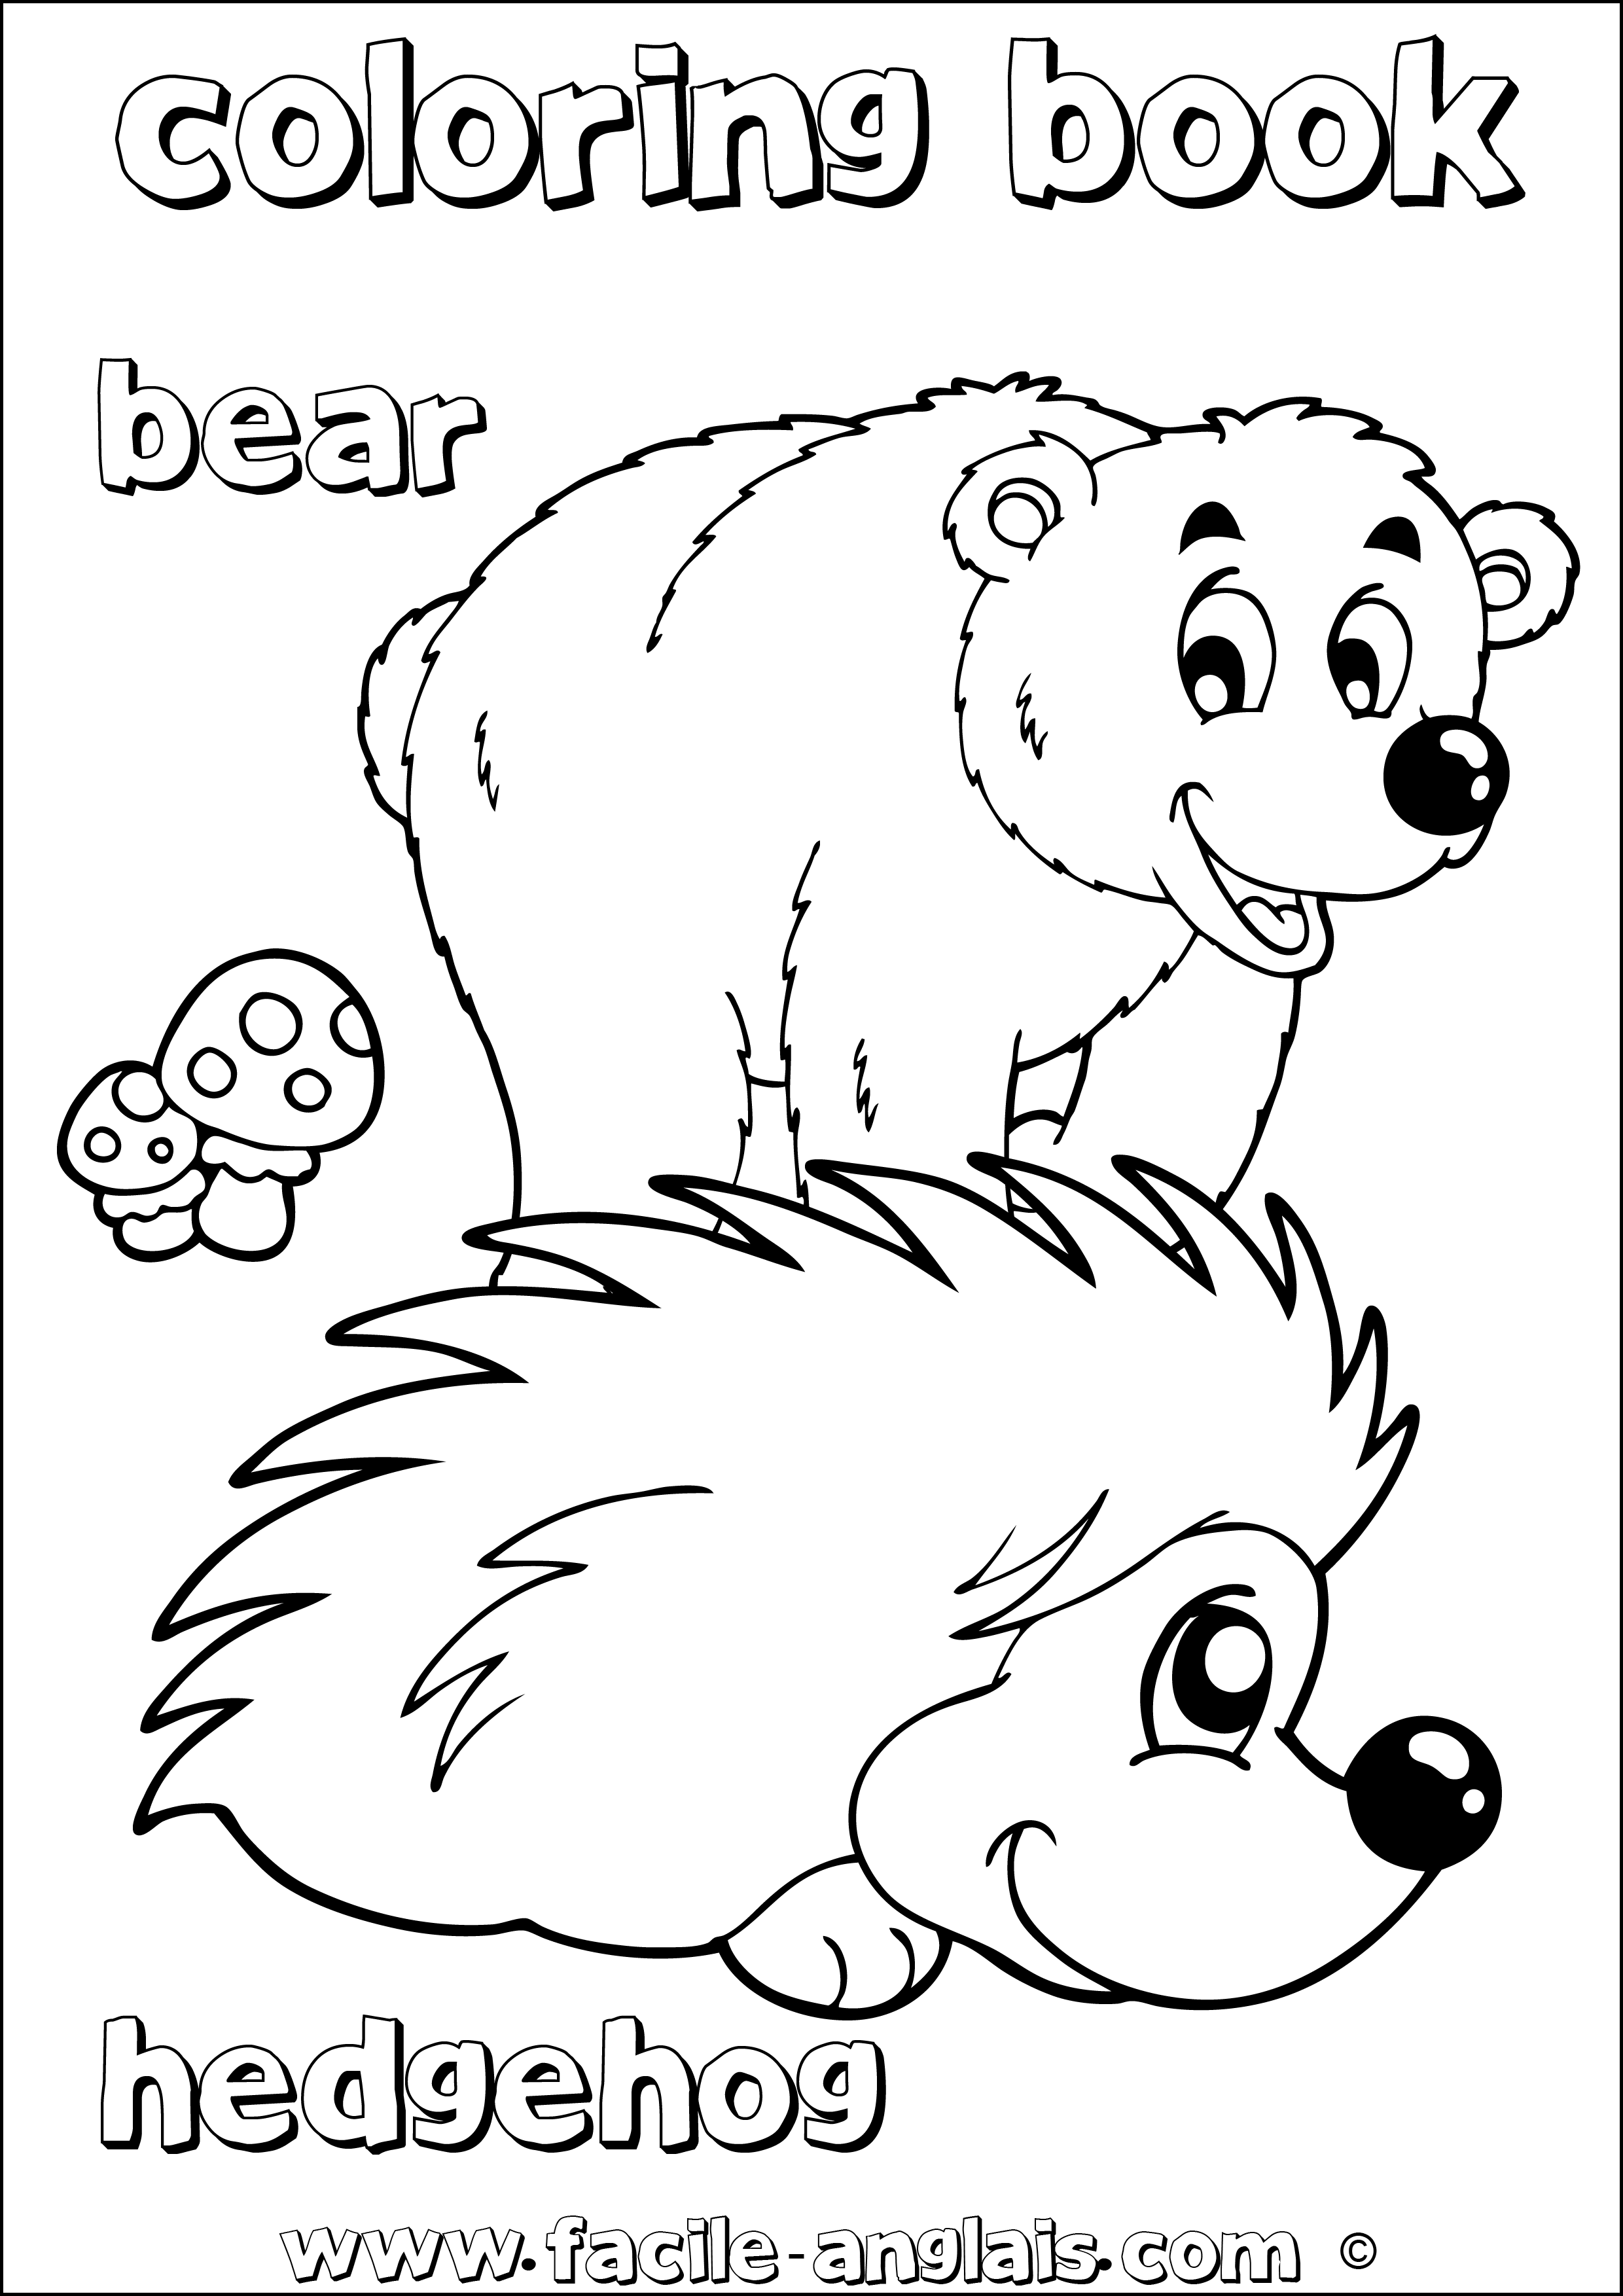 coloring book bear hedgehog